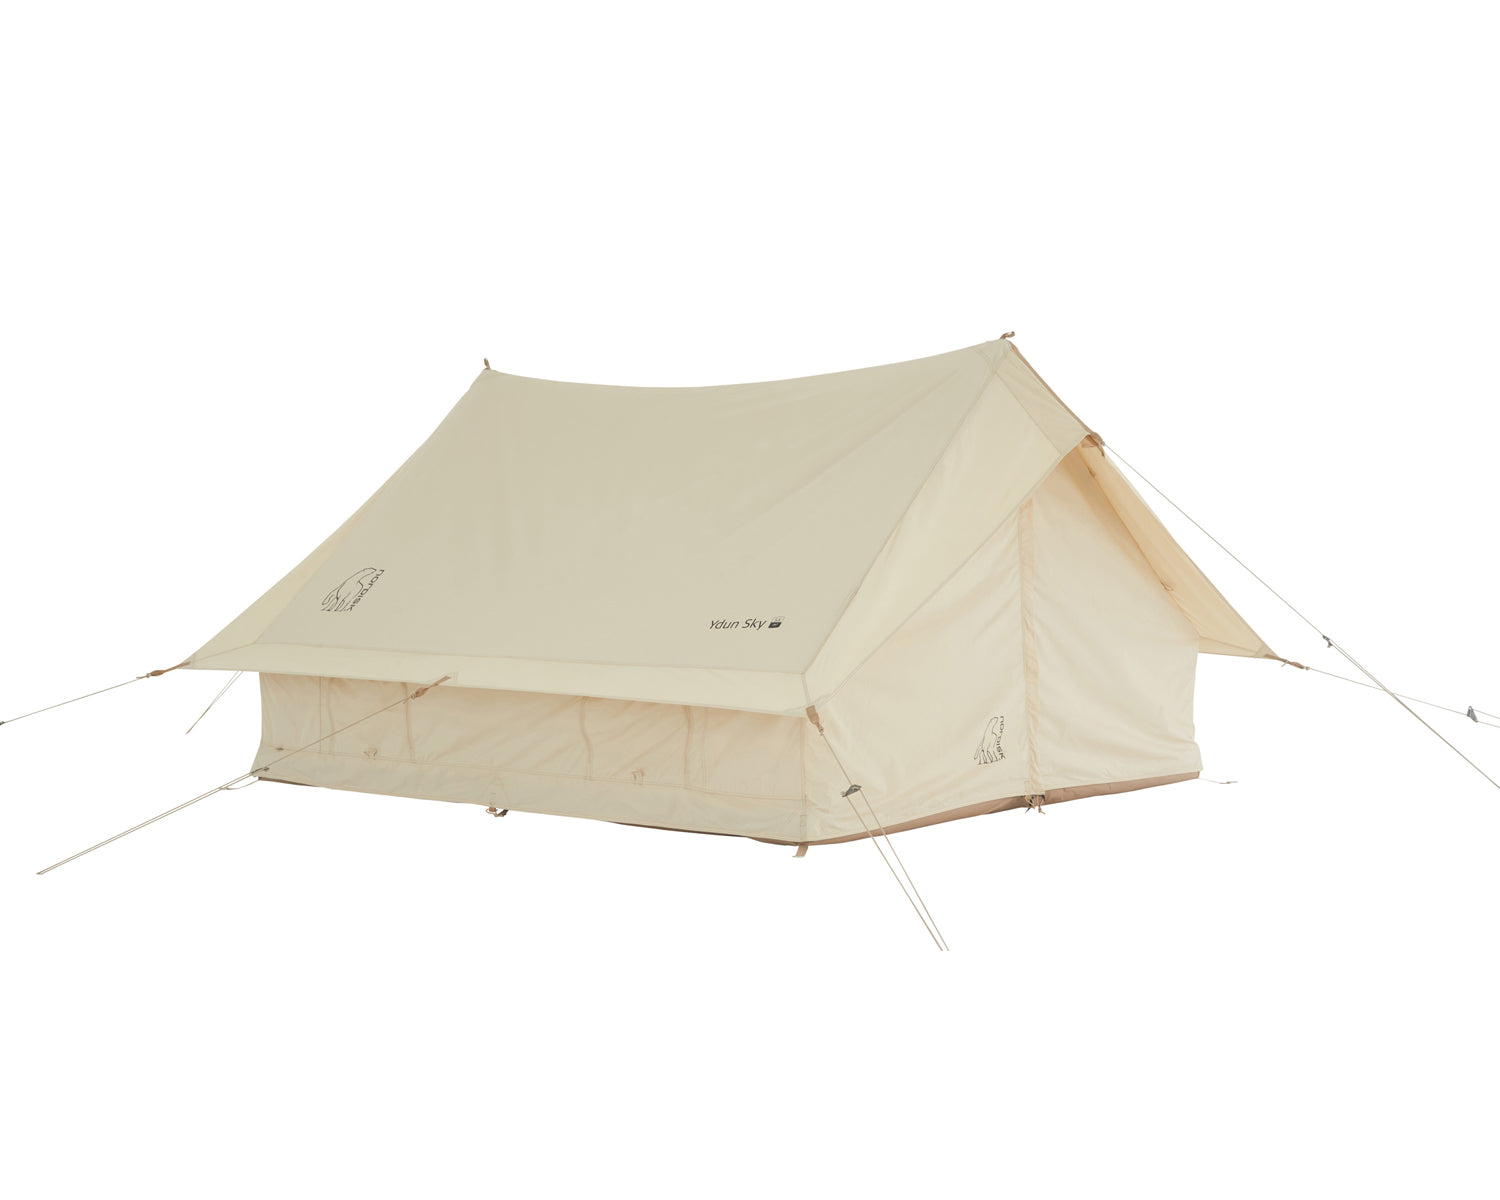 Ydun Sky glamping tent - 4 person - Sandshell